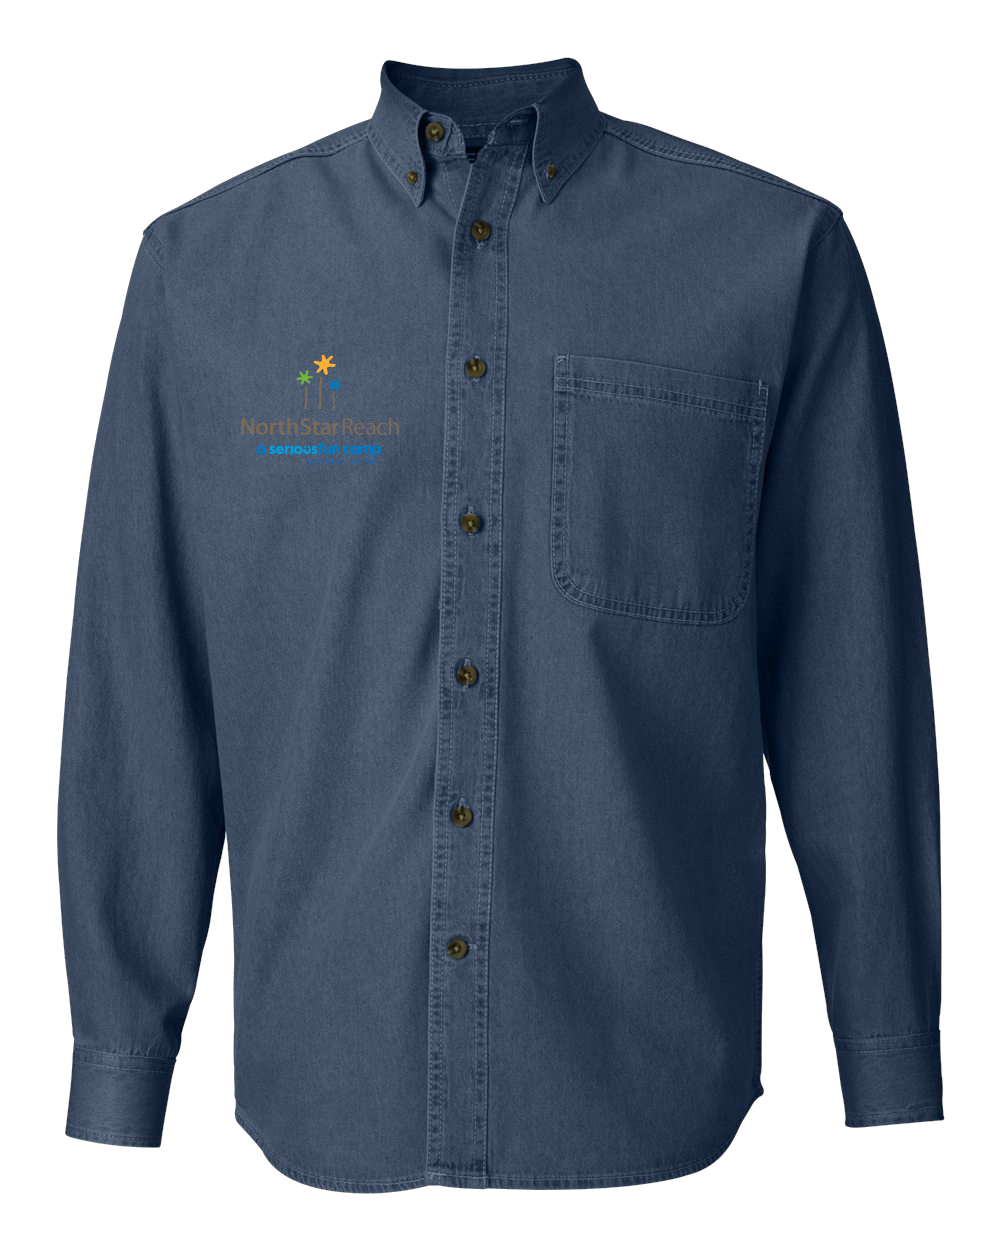 Unisex Denim Button Down Navy North Star Reach - Men's Denim Long Sleeve Shirt